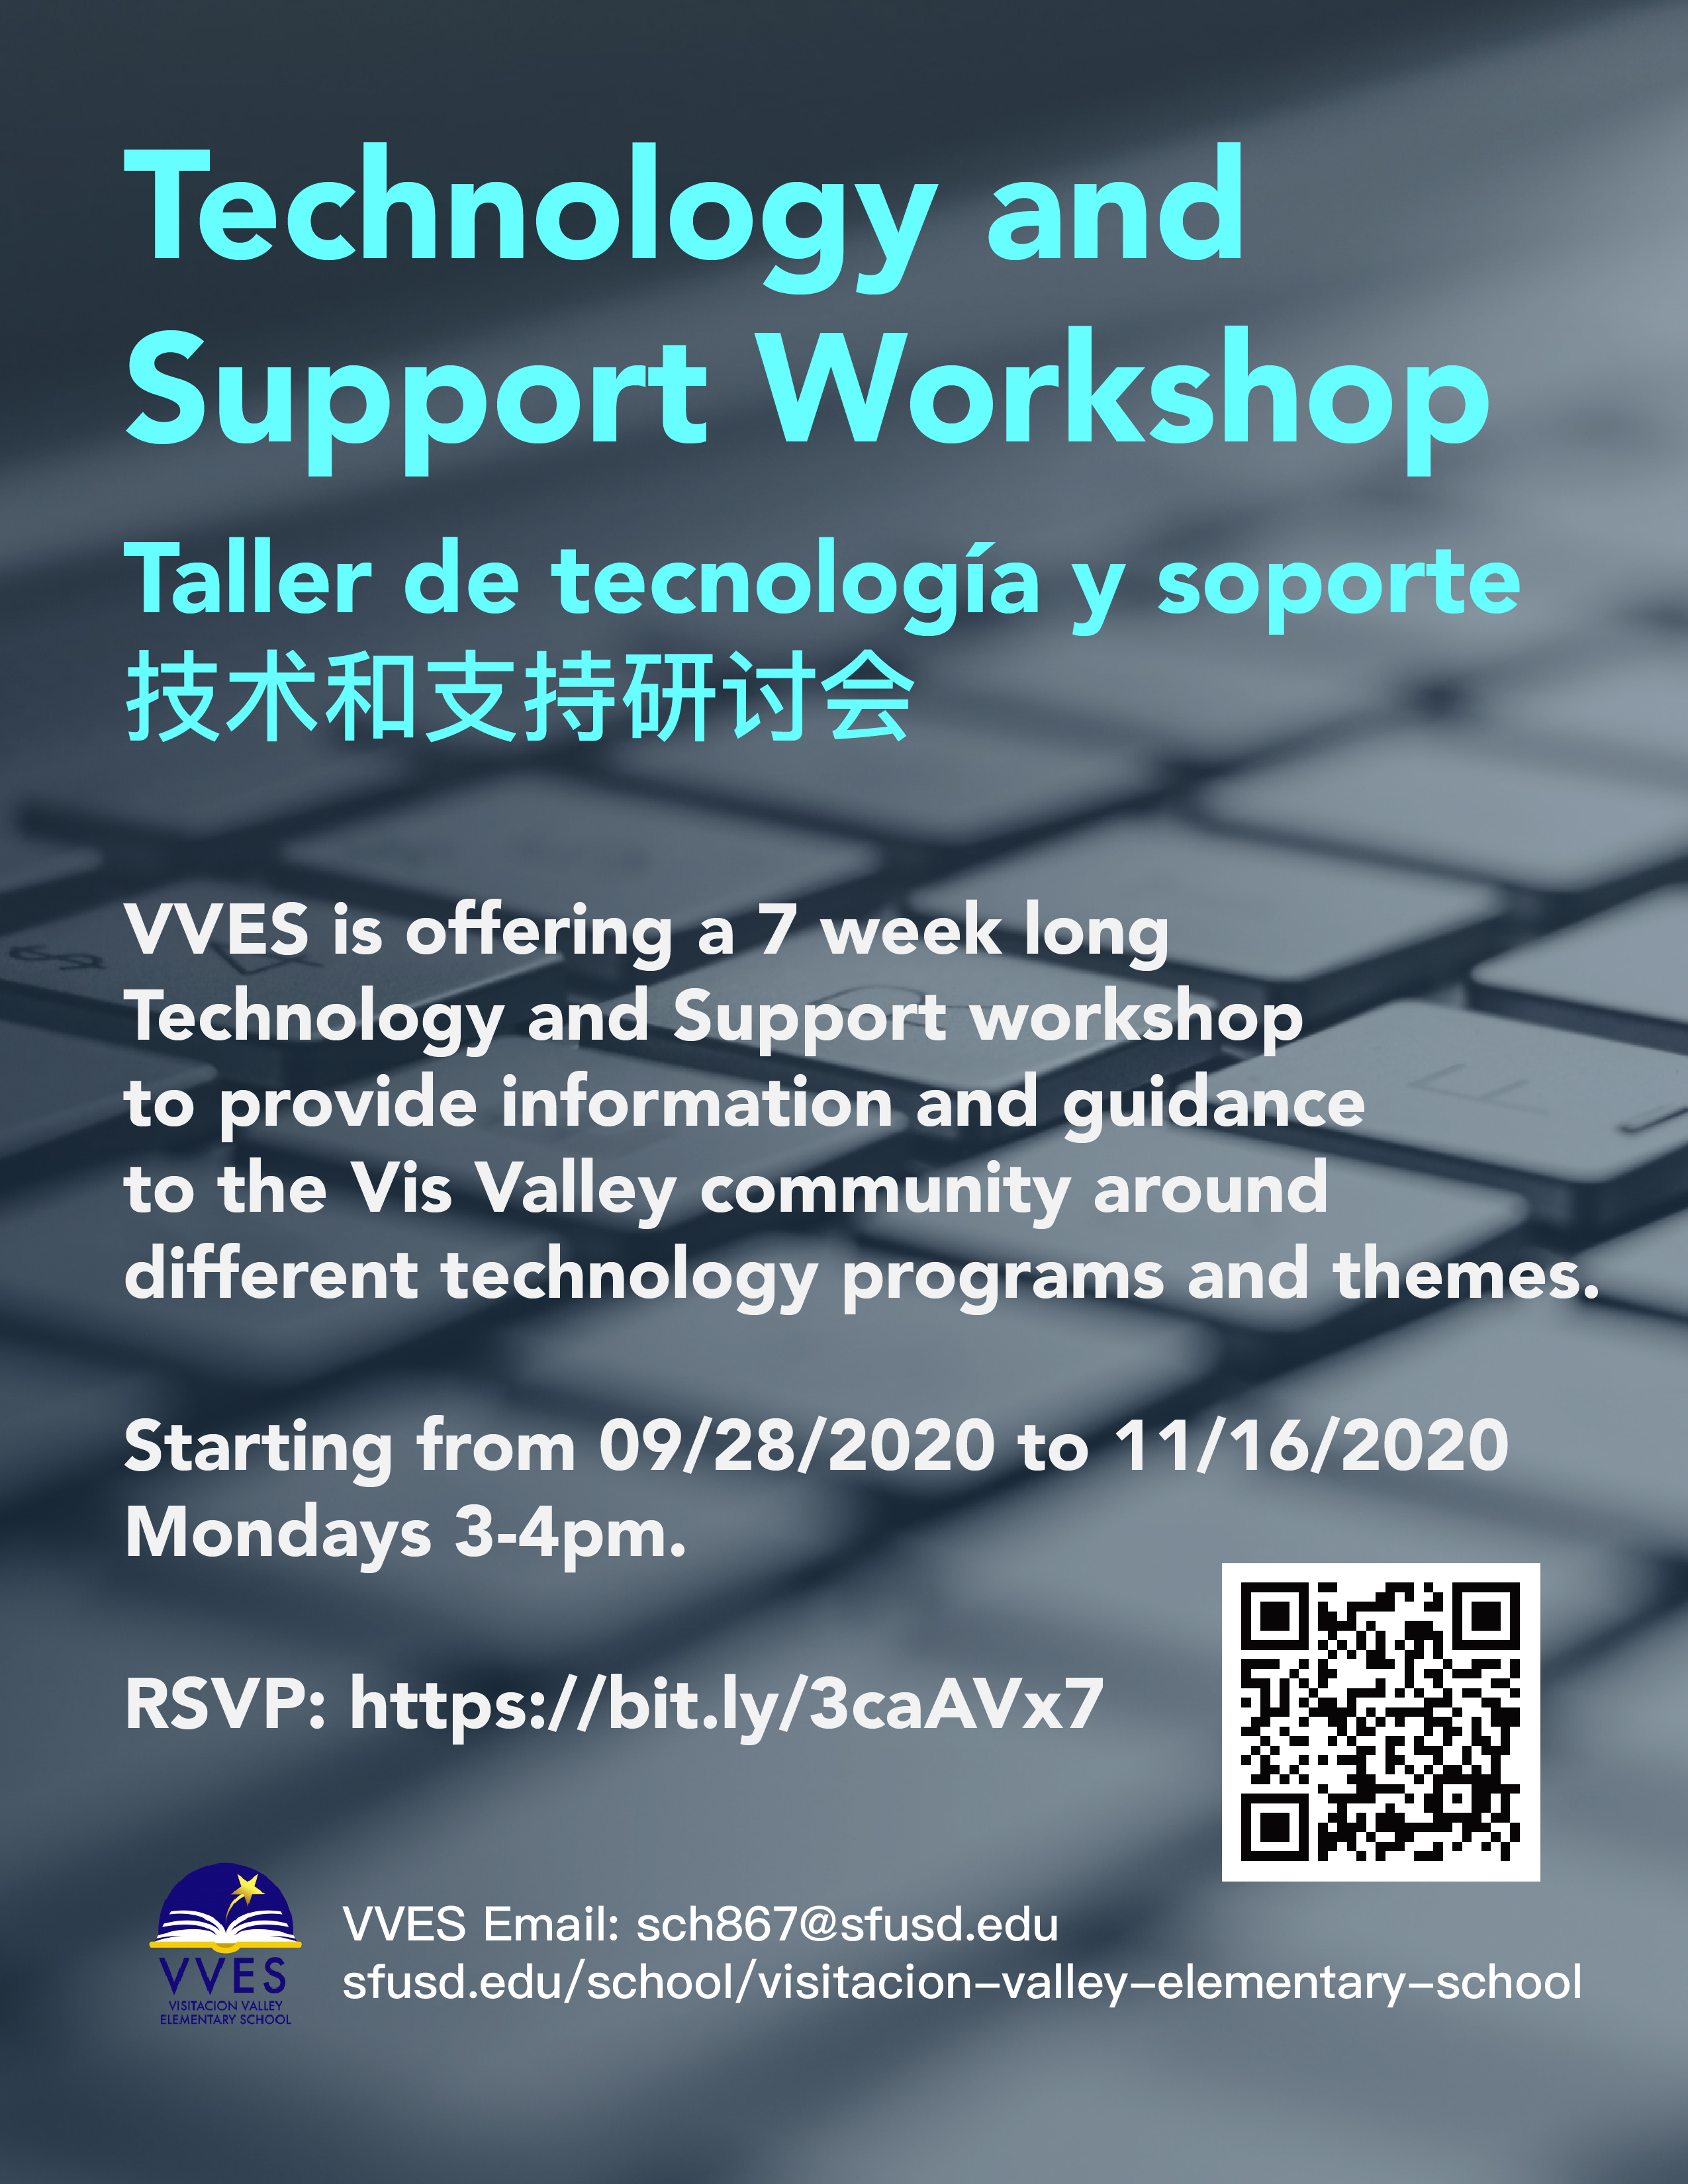 flyer describing the details of VVES Technology and Support workshop.